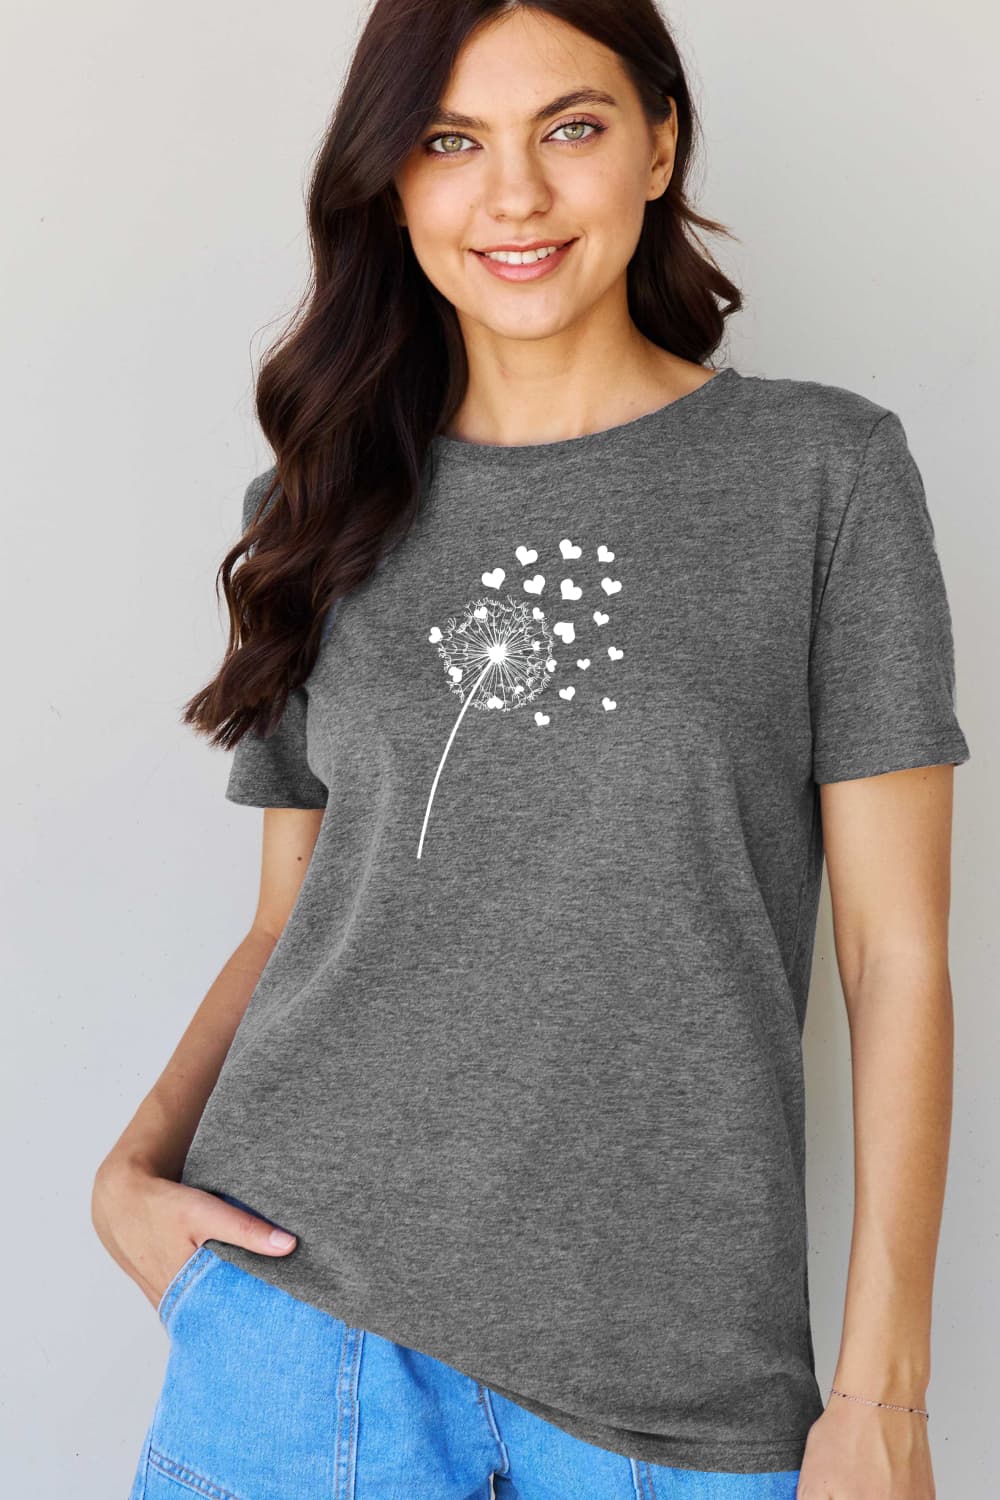 Simply Love Dandelion Heart Graphic Cotton T-Shirt